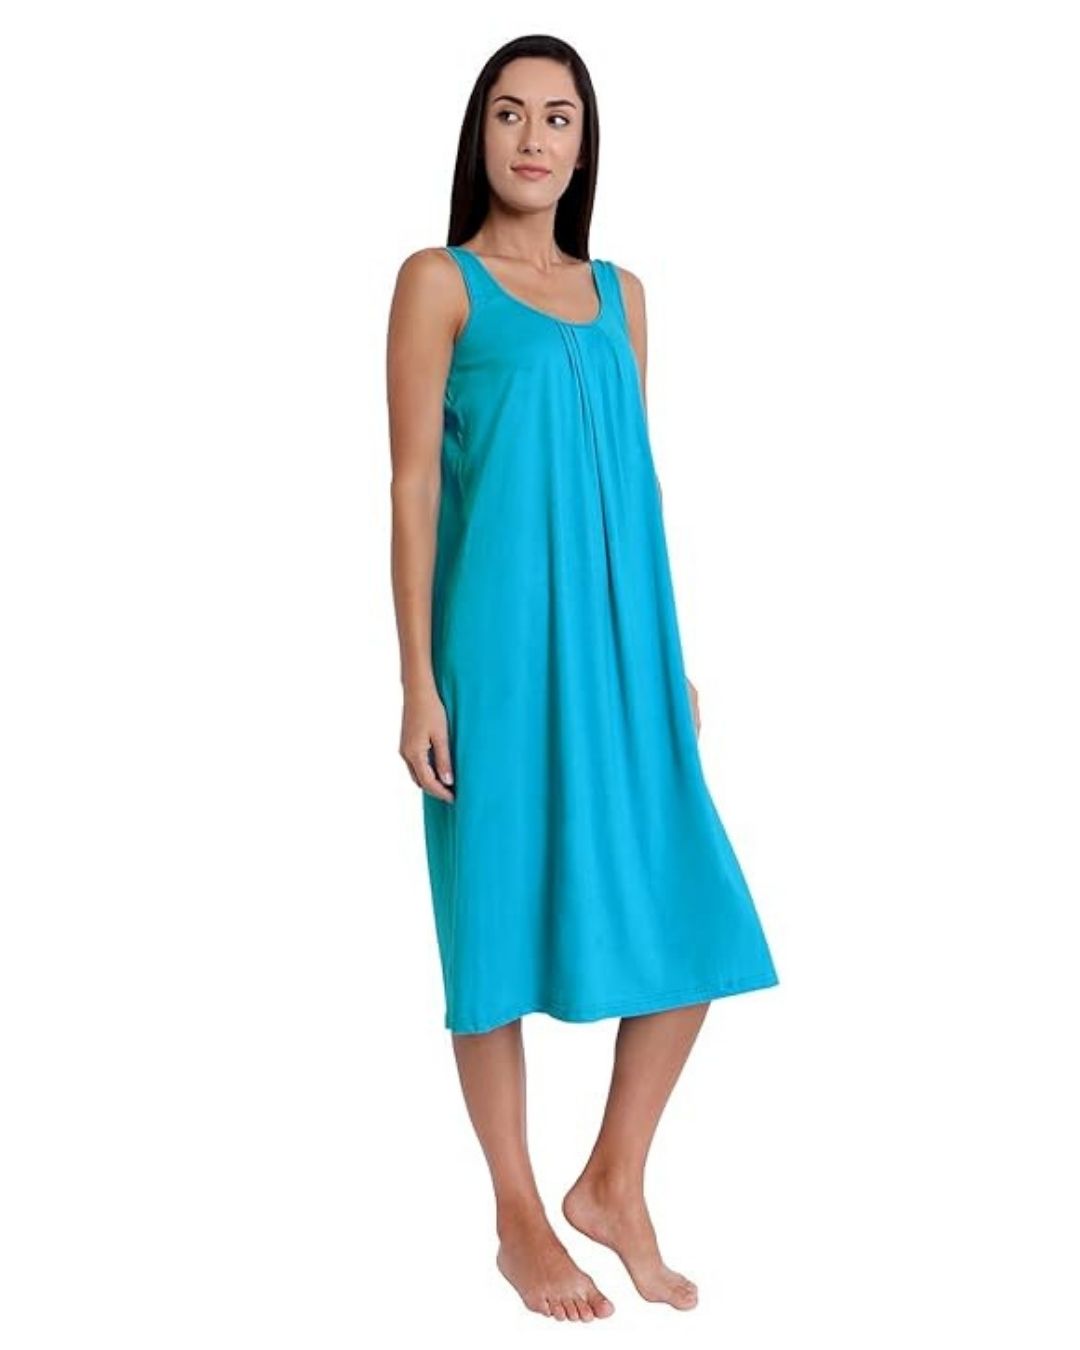 TWGE Cotton Full Length Camisole for Women - Long Innerwear - Color Firozi